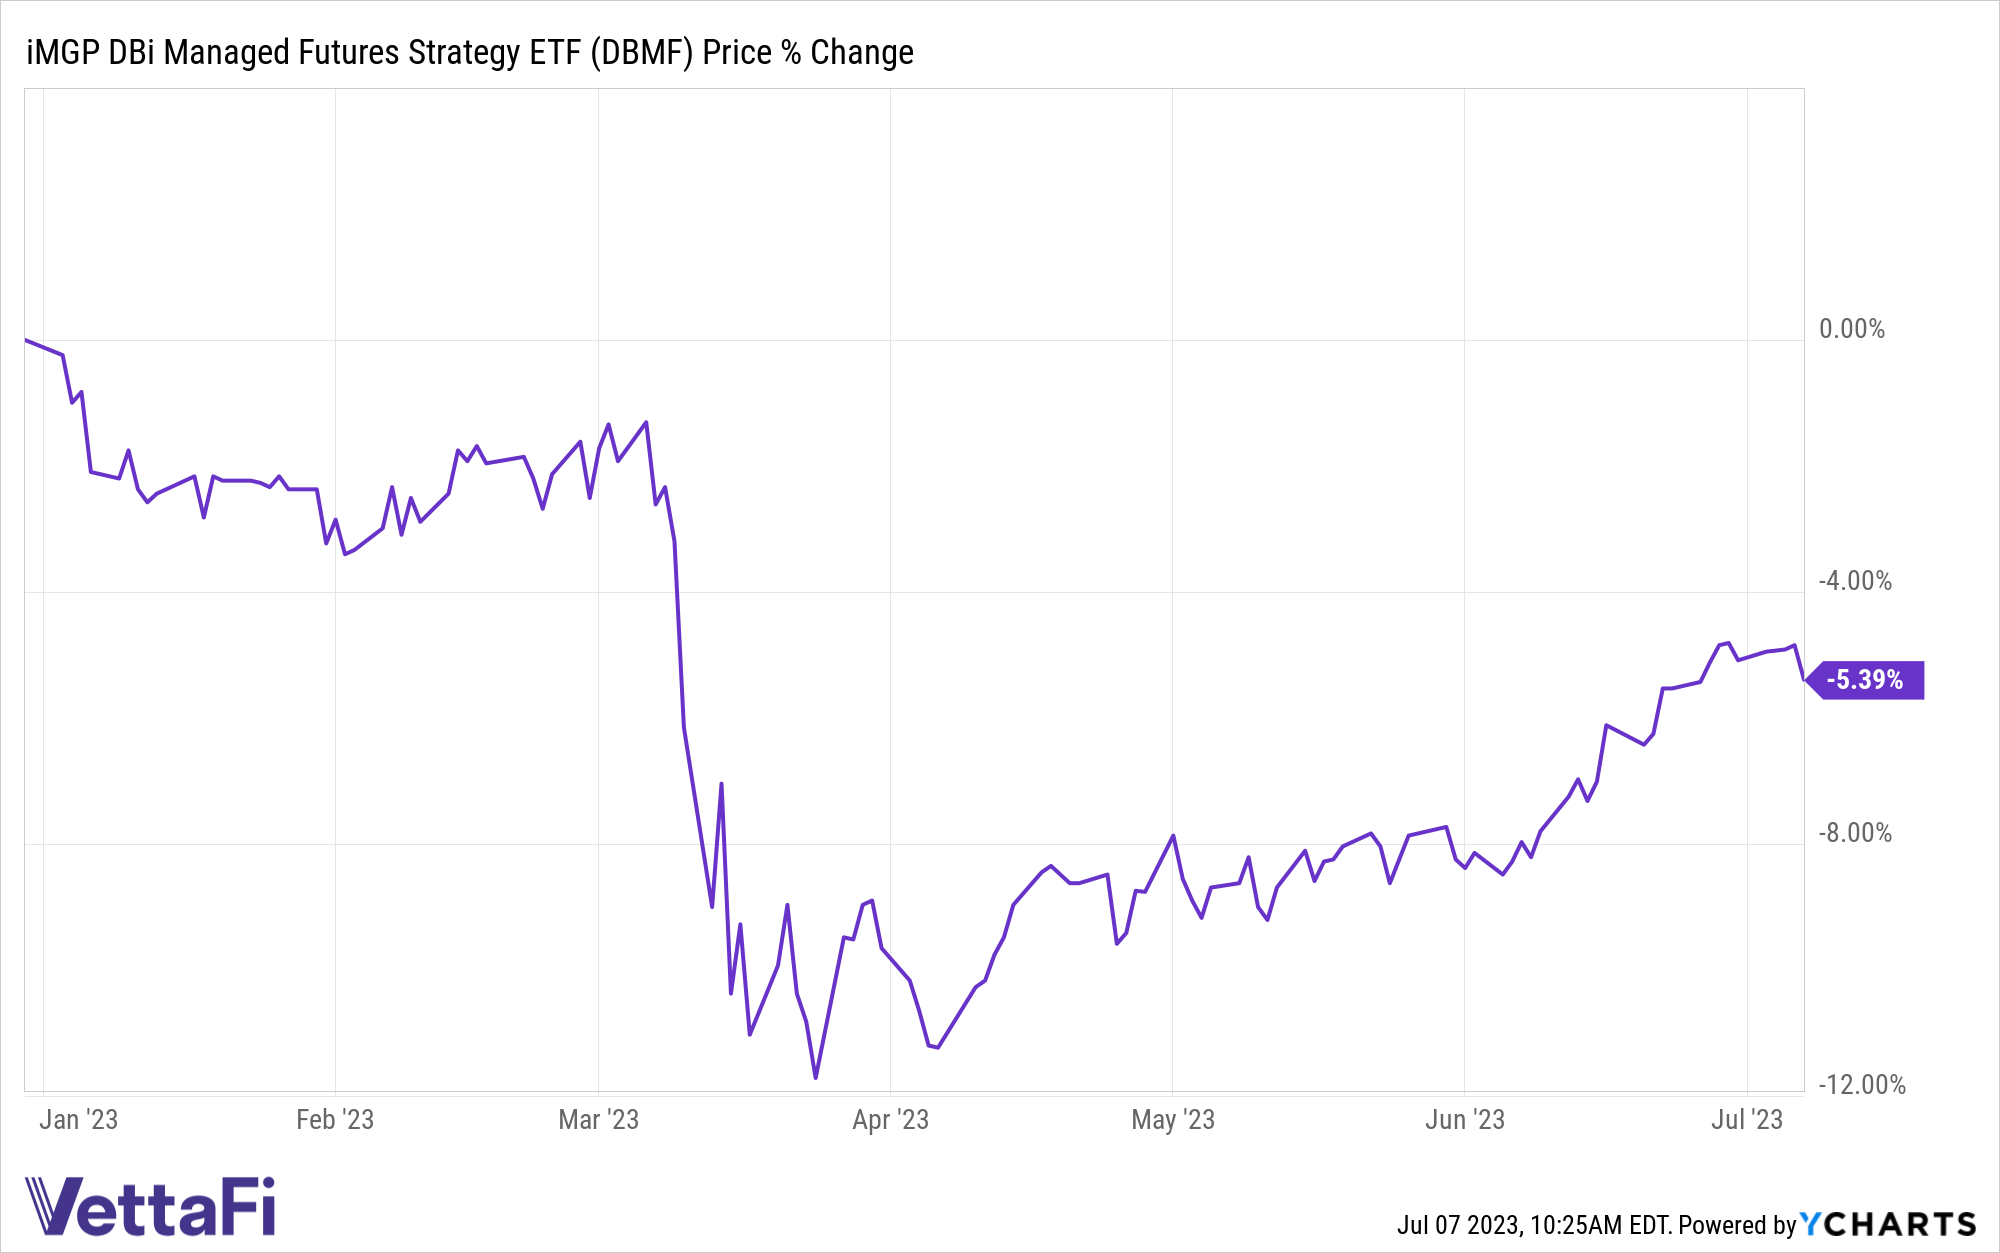 Price chart of DBMF performance YTD, down 5.39%. 